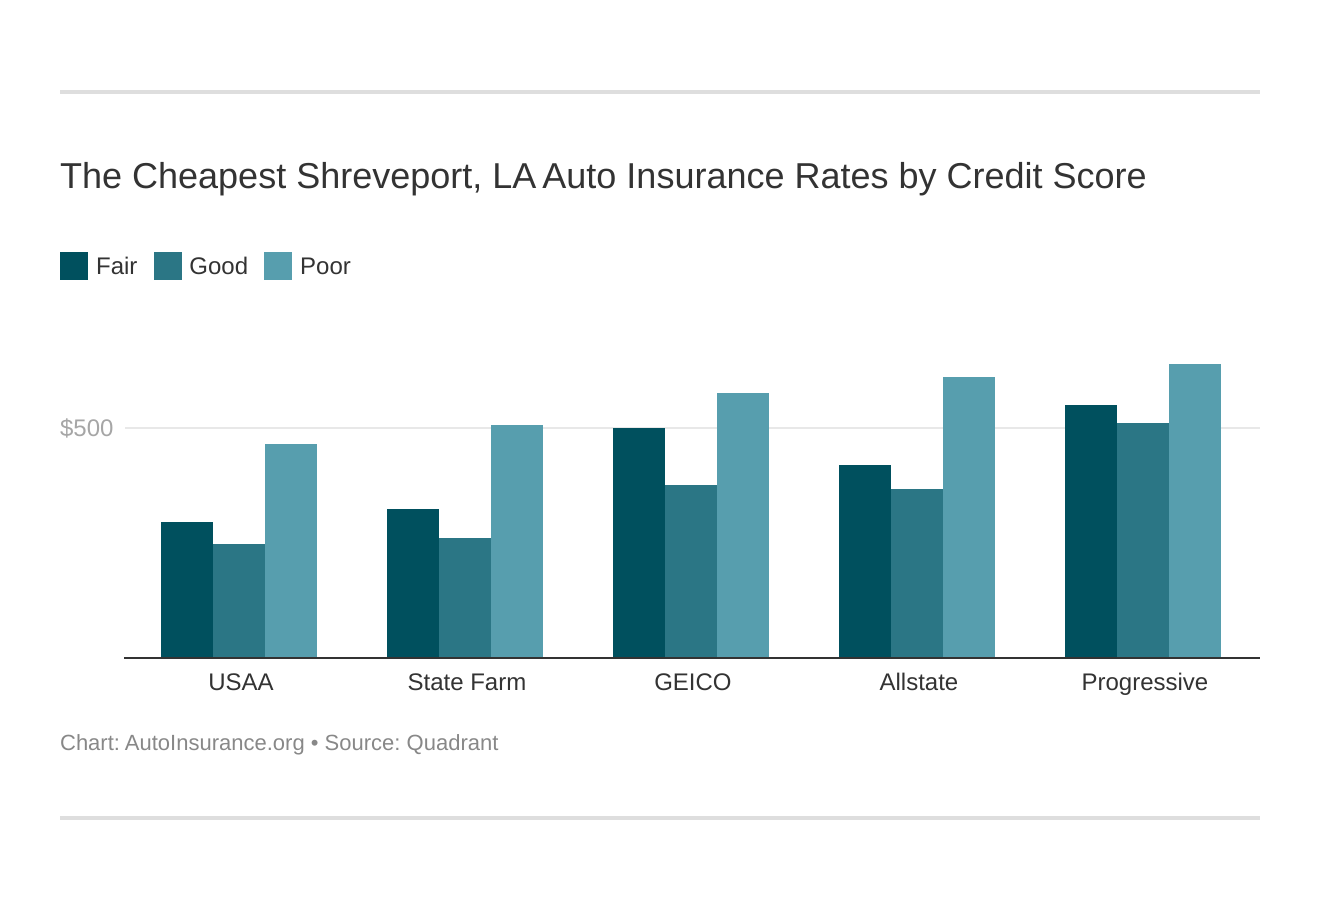 The Cheapest Shreveport, LA Auto Insurance Rates by Credit Score